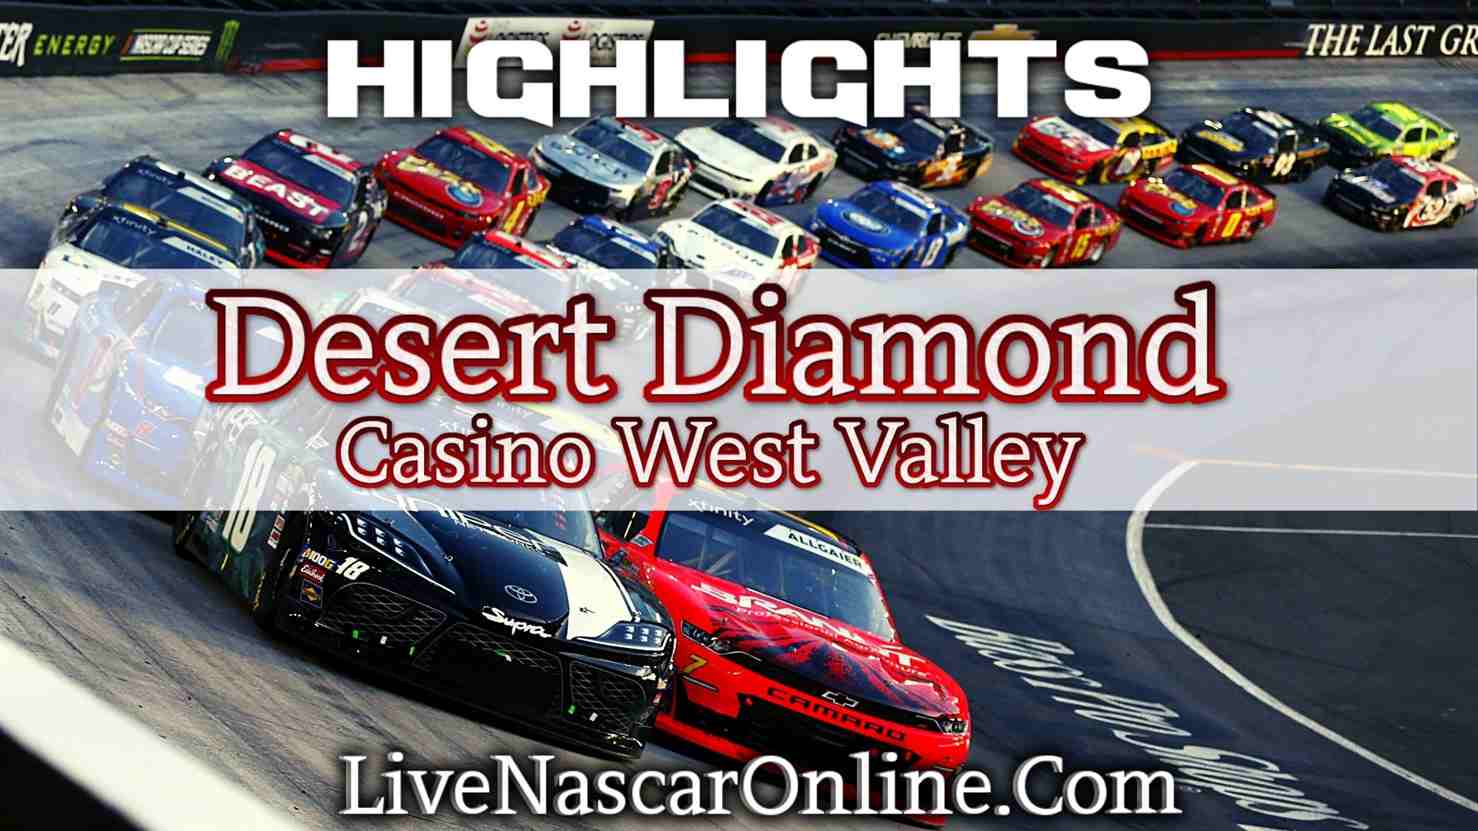 Desert Diamond Casino West Valley 200 Highlights 2020